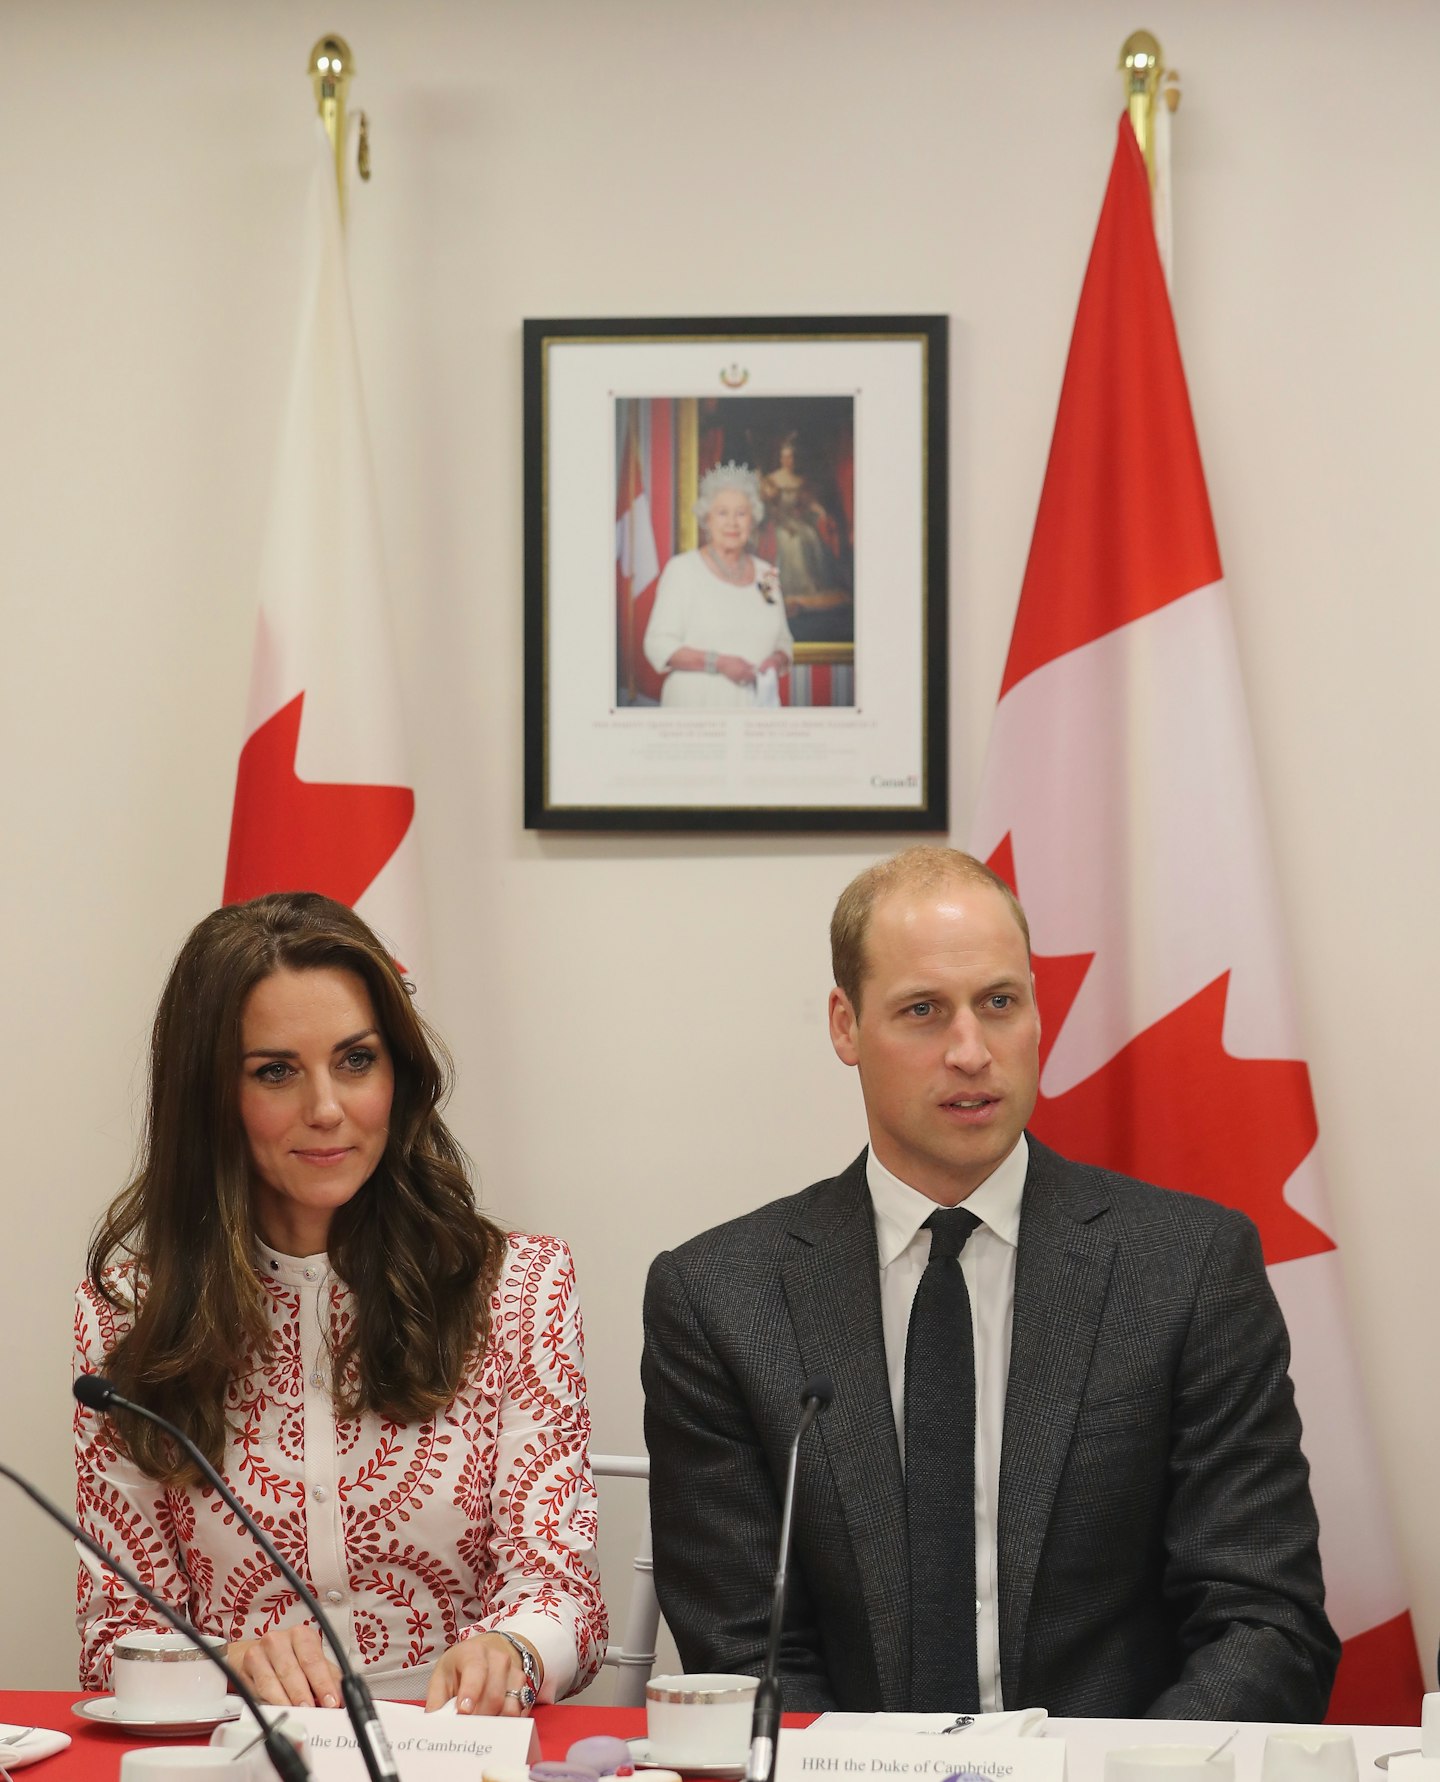 royal-family-tour-canada